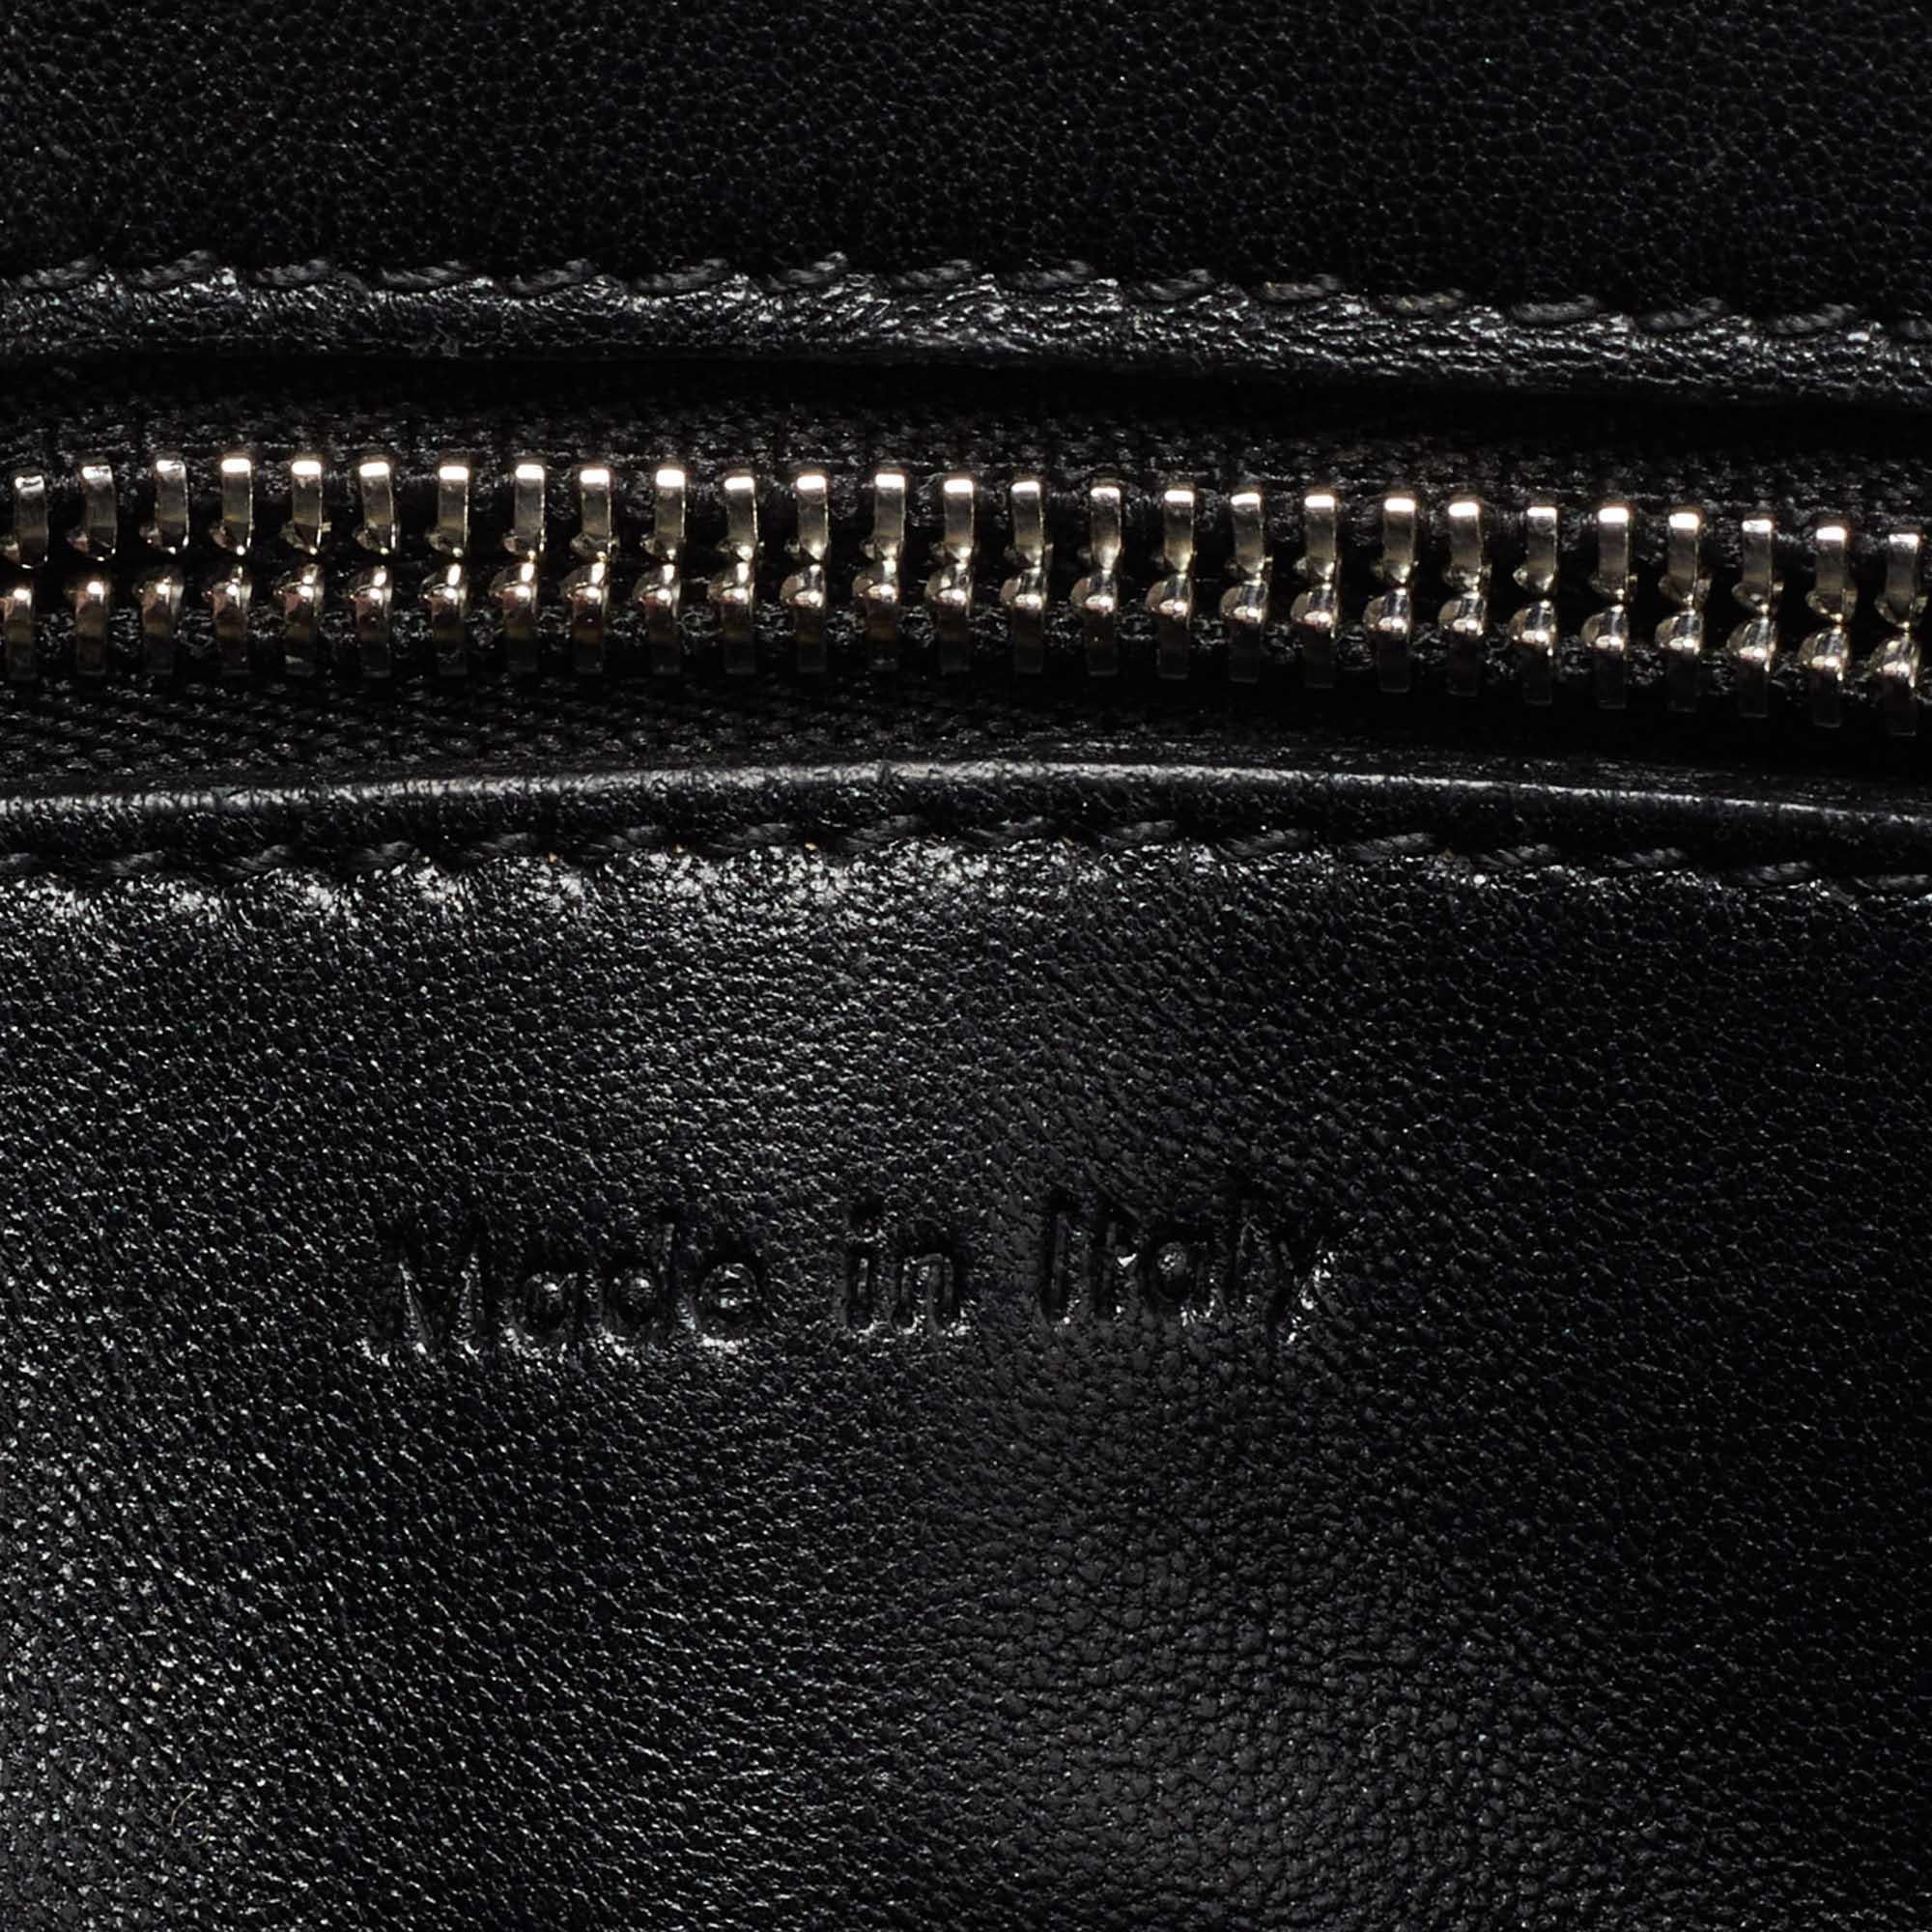 Celine Black/Grey Leather and Calf Hair Medium Edge Top Handle Bag For Sale 2